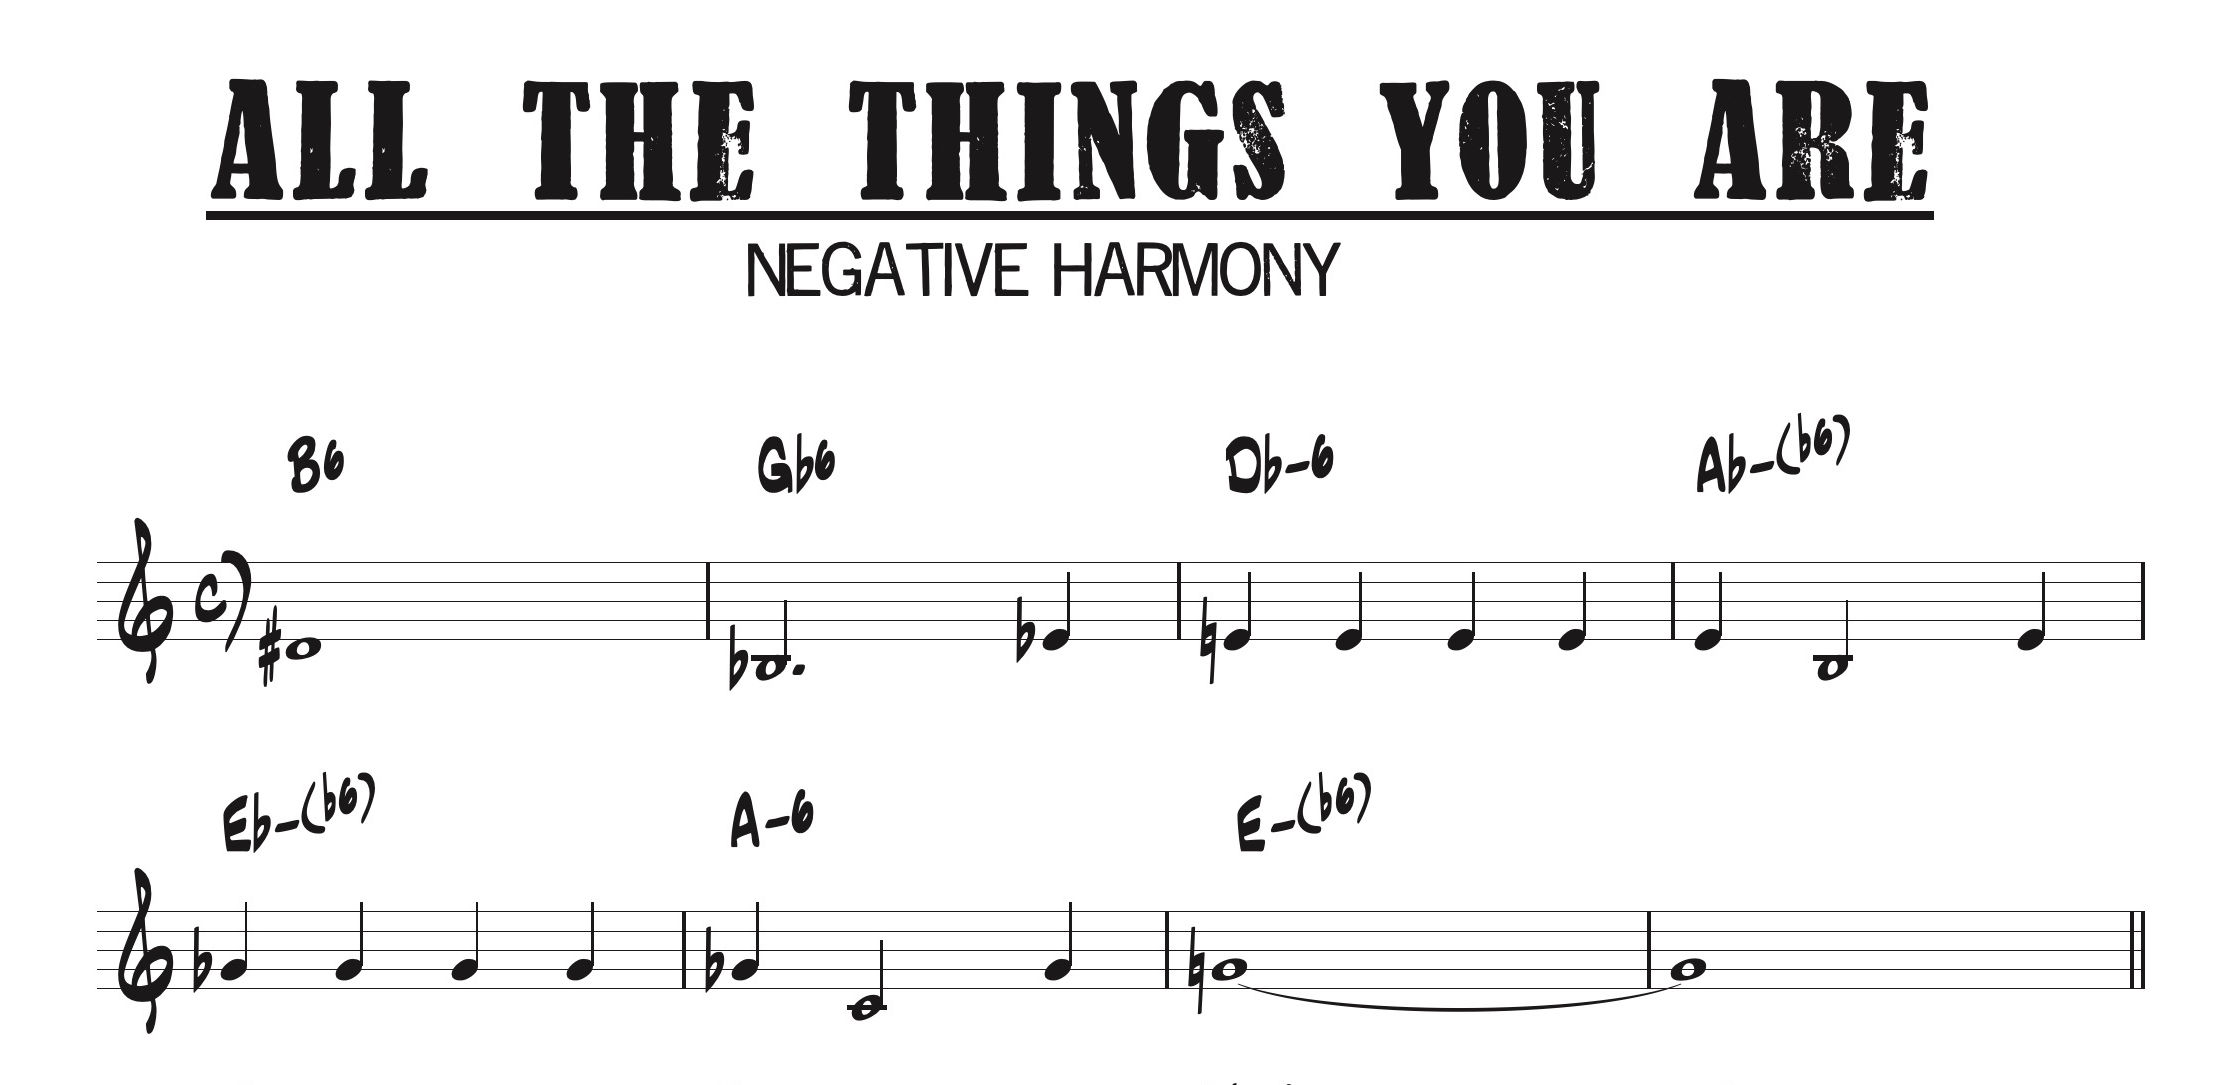 Negative Harmony Chart C